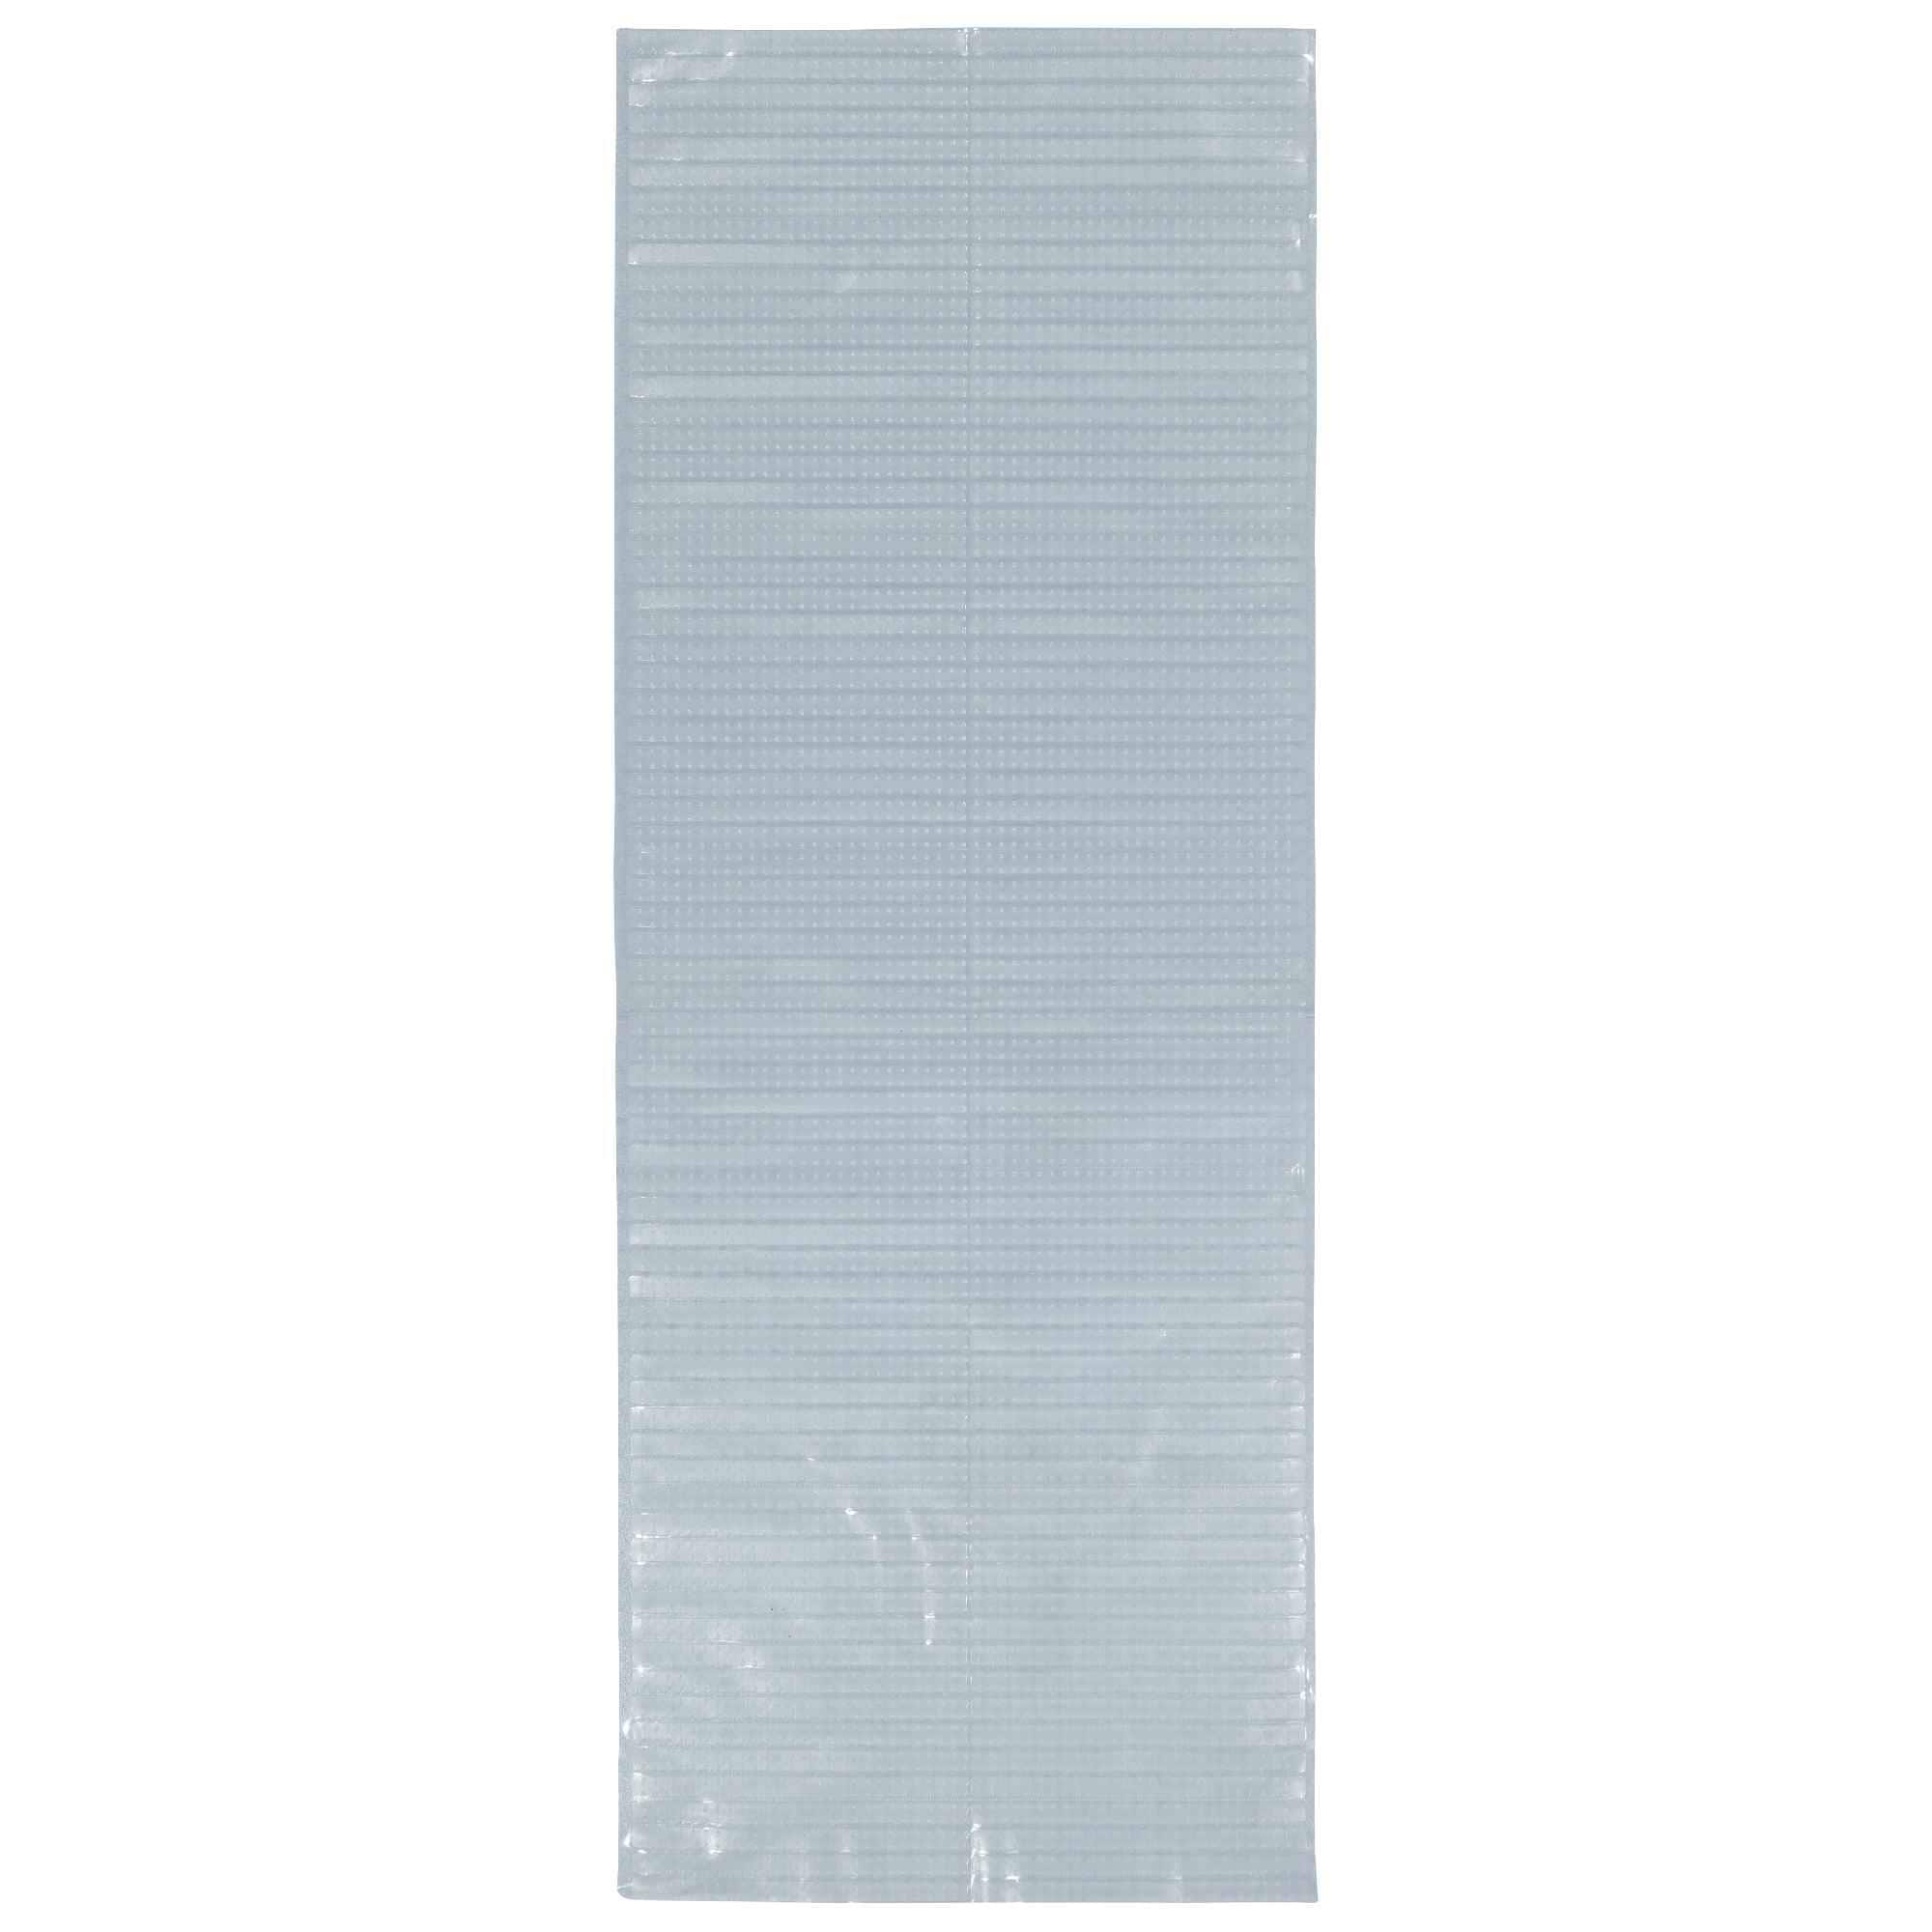  Clear Plastic Vinyl Rug Protector Cover Clear Vinyl